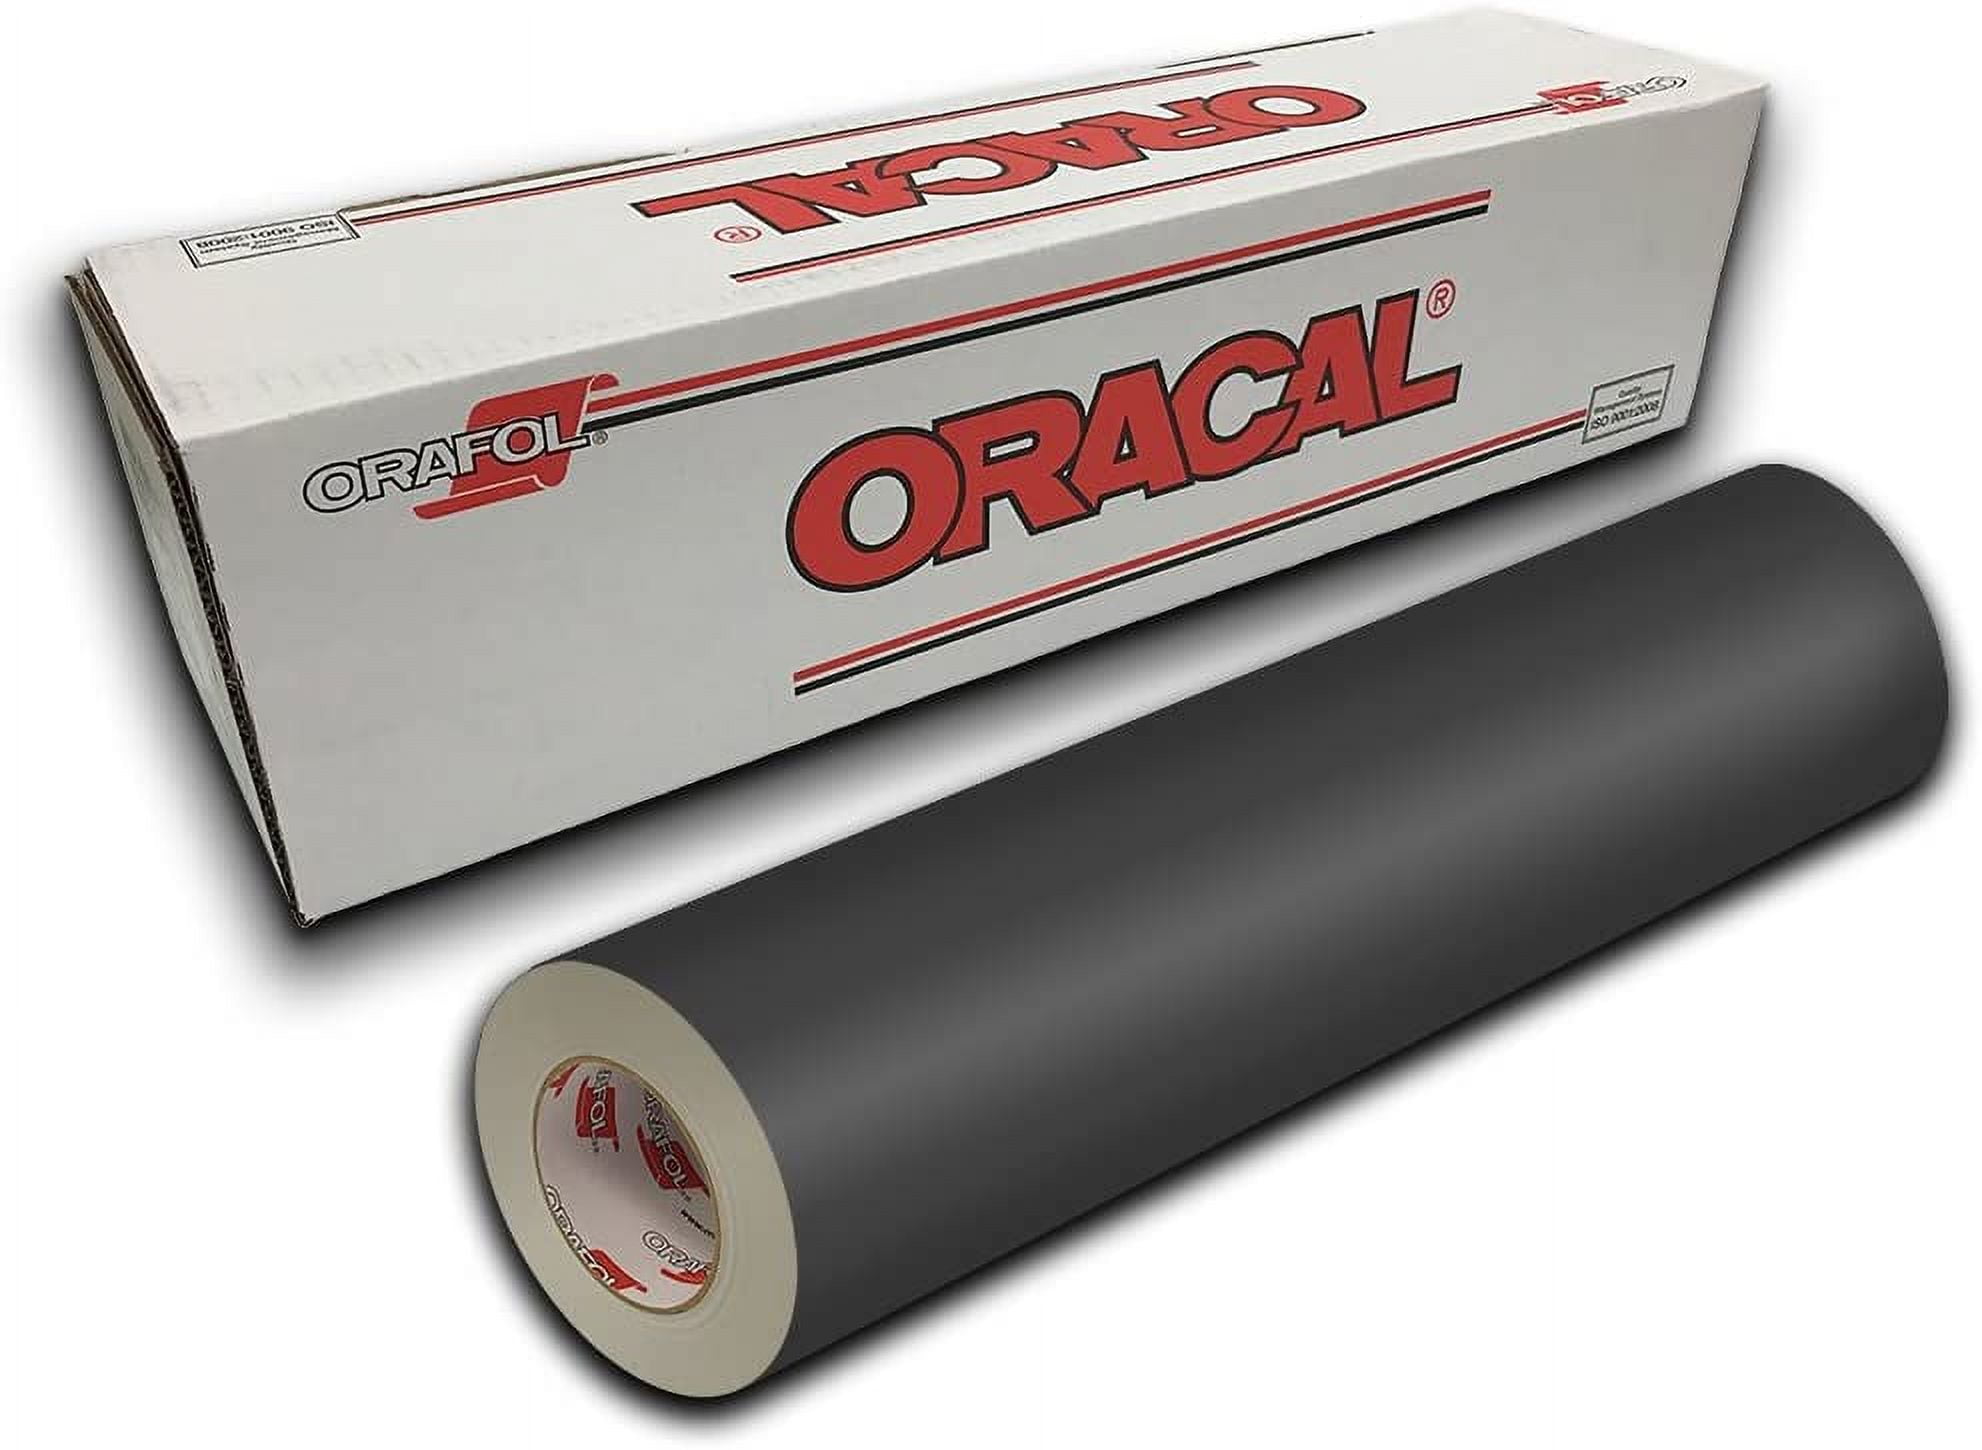 Oracal 651 Permanent Self-Adhesive Premium Craft Sticker Vinyl 24 x 30ft  (10yd) Roll - Transparent 